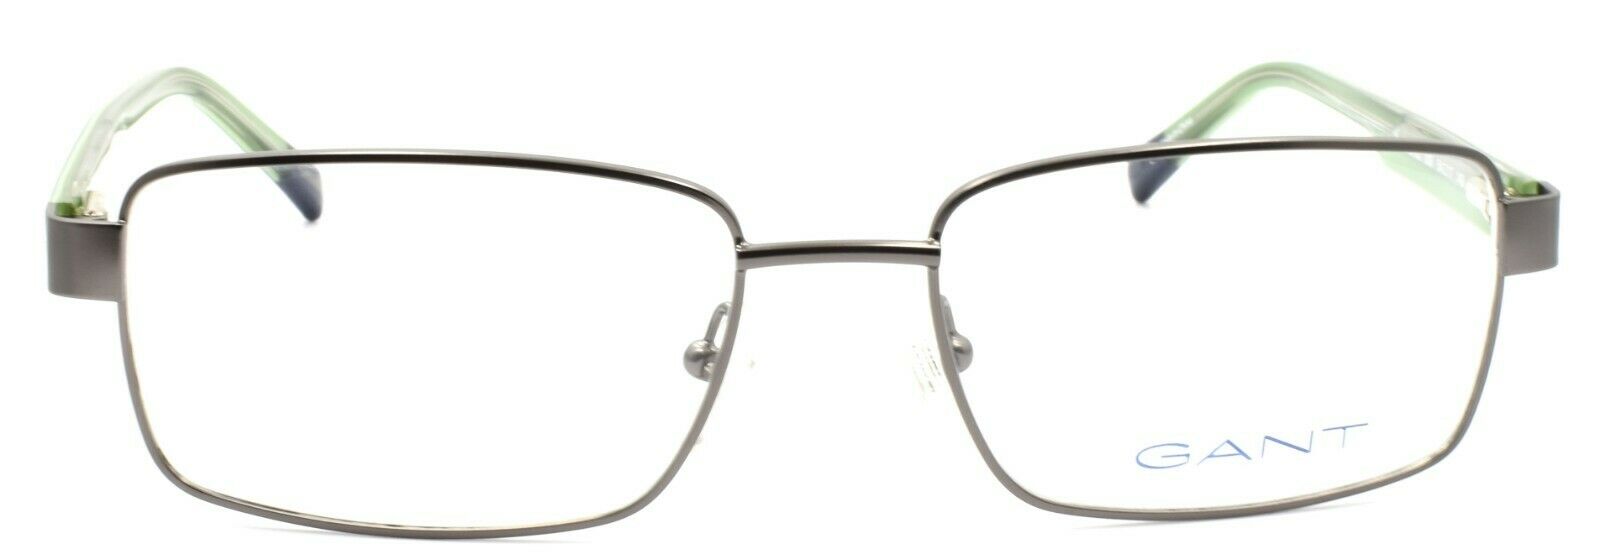 2-GANT GA3102 009 Men's Eyeglasses Frames 54-17-140 Matte Gunmetal + CASE-664689746354-IKSpecs